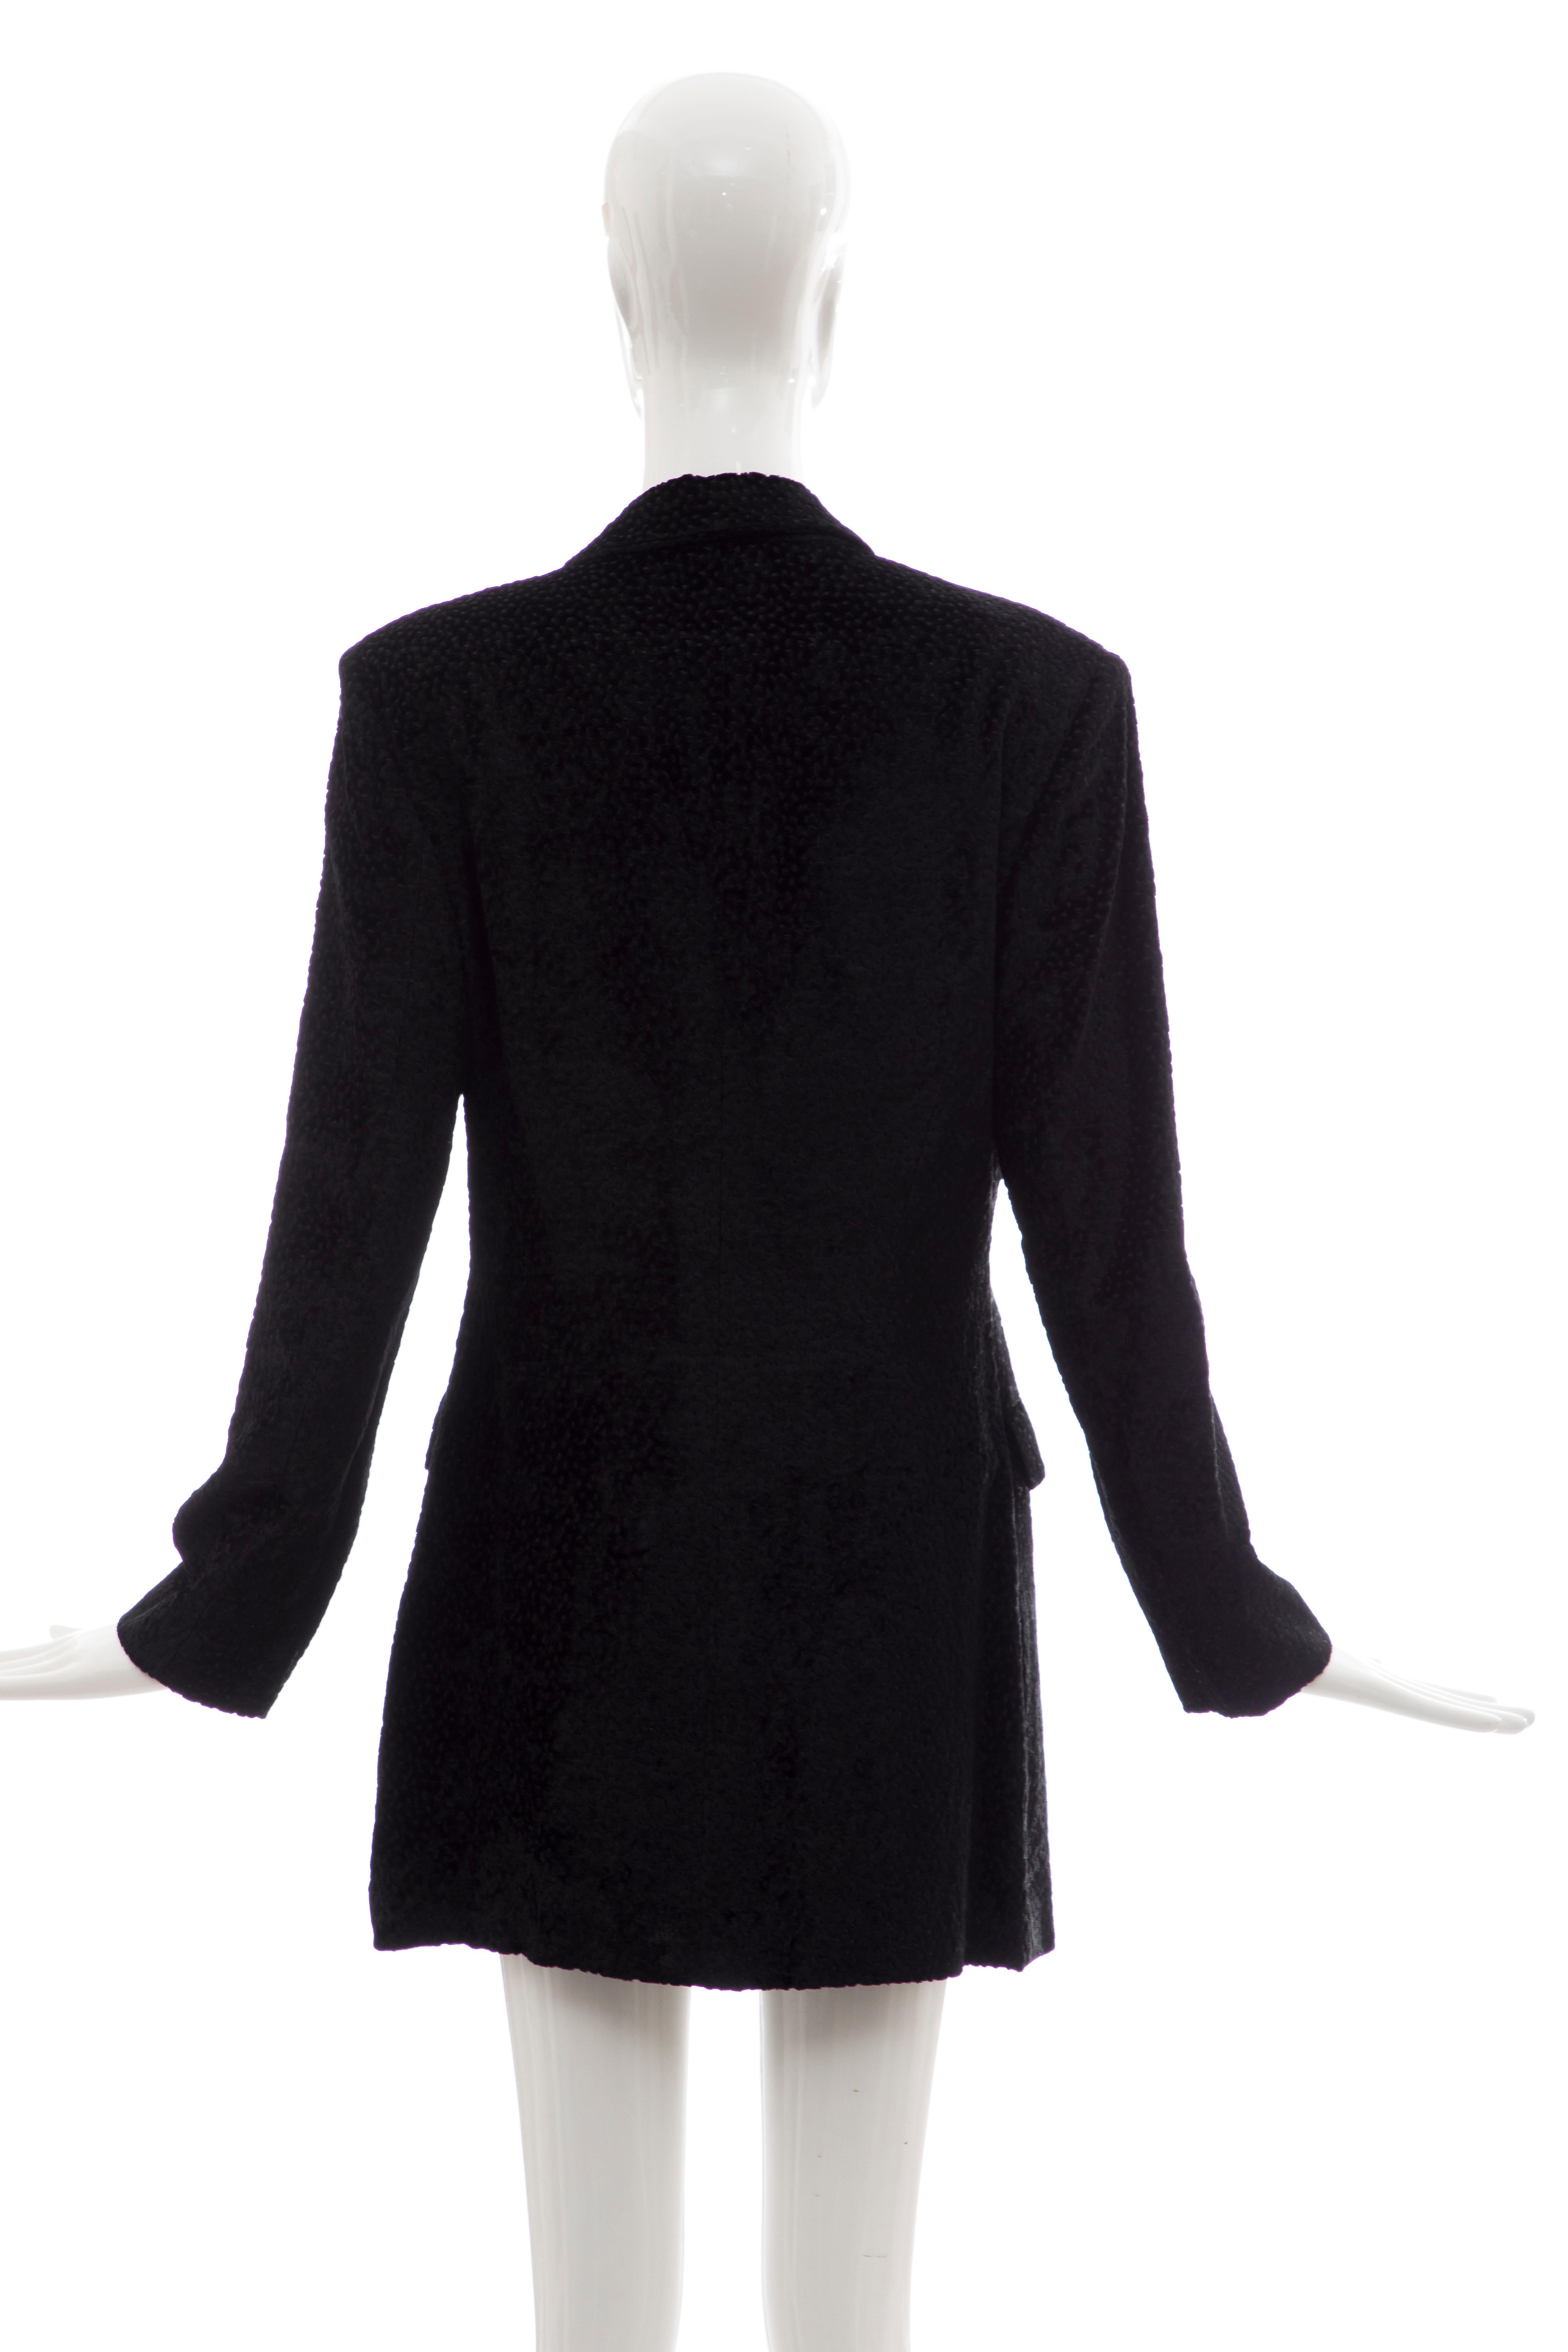 Salvatore Ferragamo Black Flecked Velvet Blazer, Circa: 1990's For Sale 3